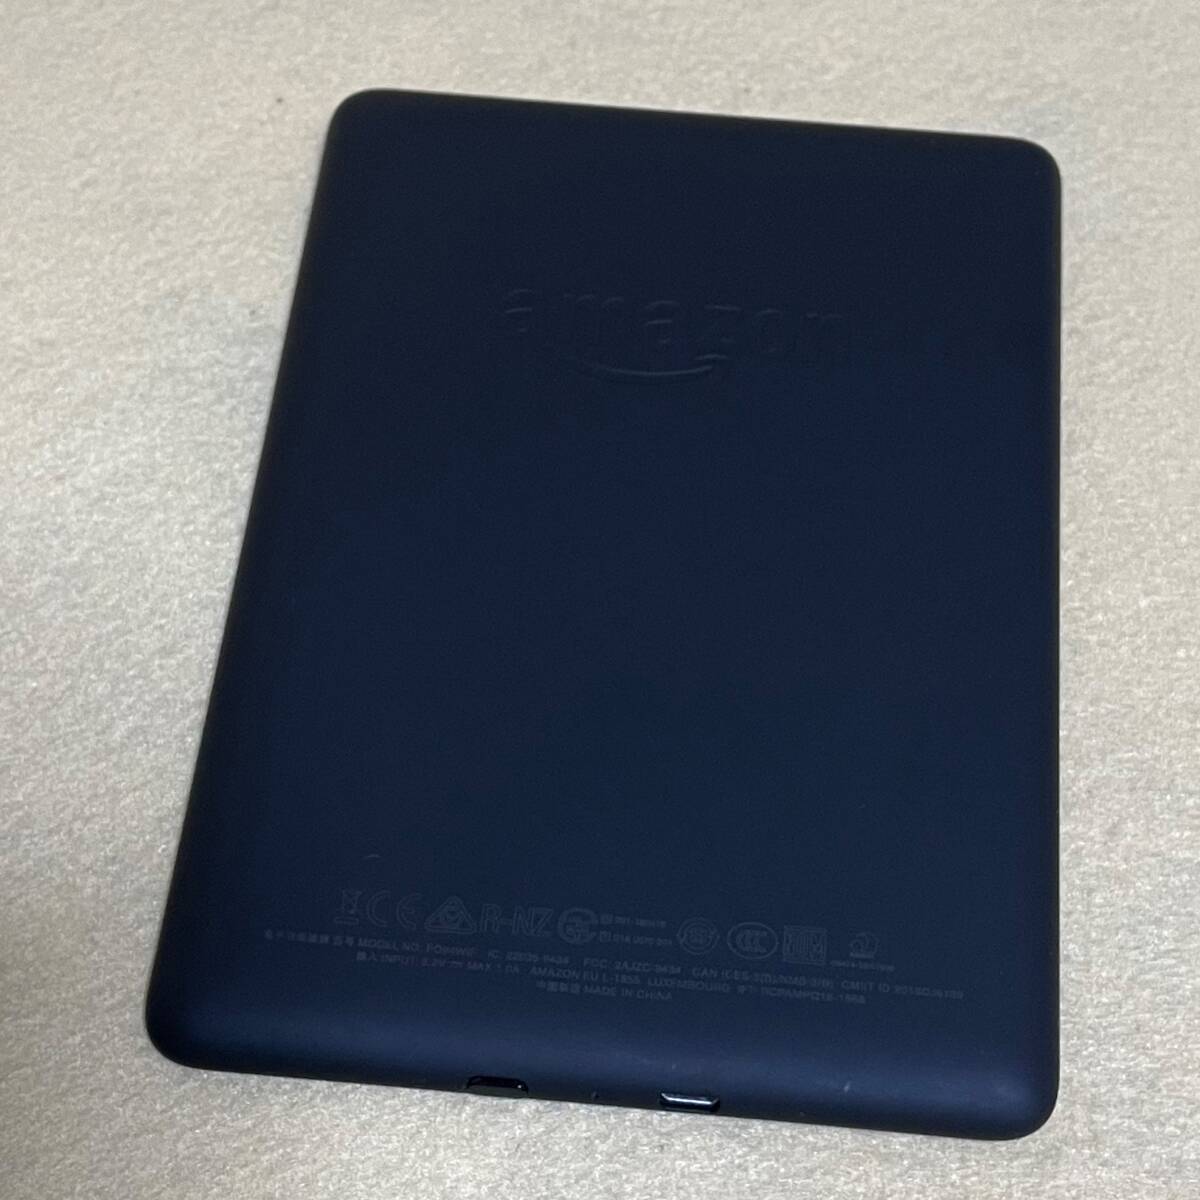 [ used ]Amazon Kindle Paperwhite Wi-Fi no. 10 generation 32GB[PQ94WIF] black 03285